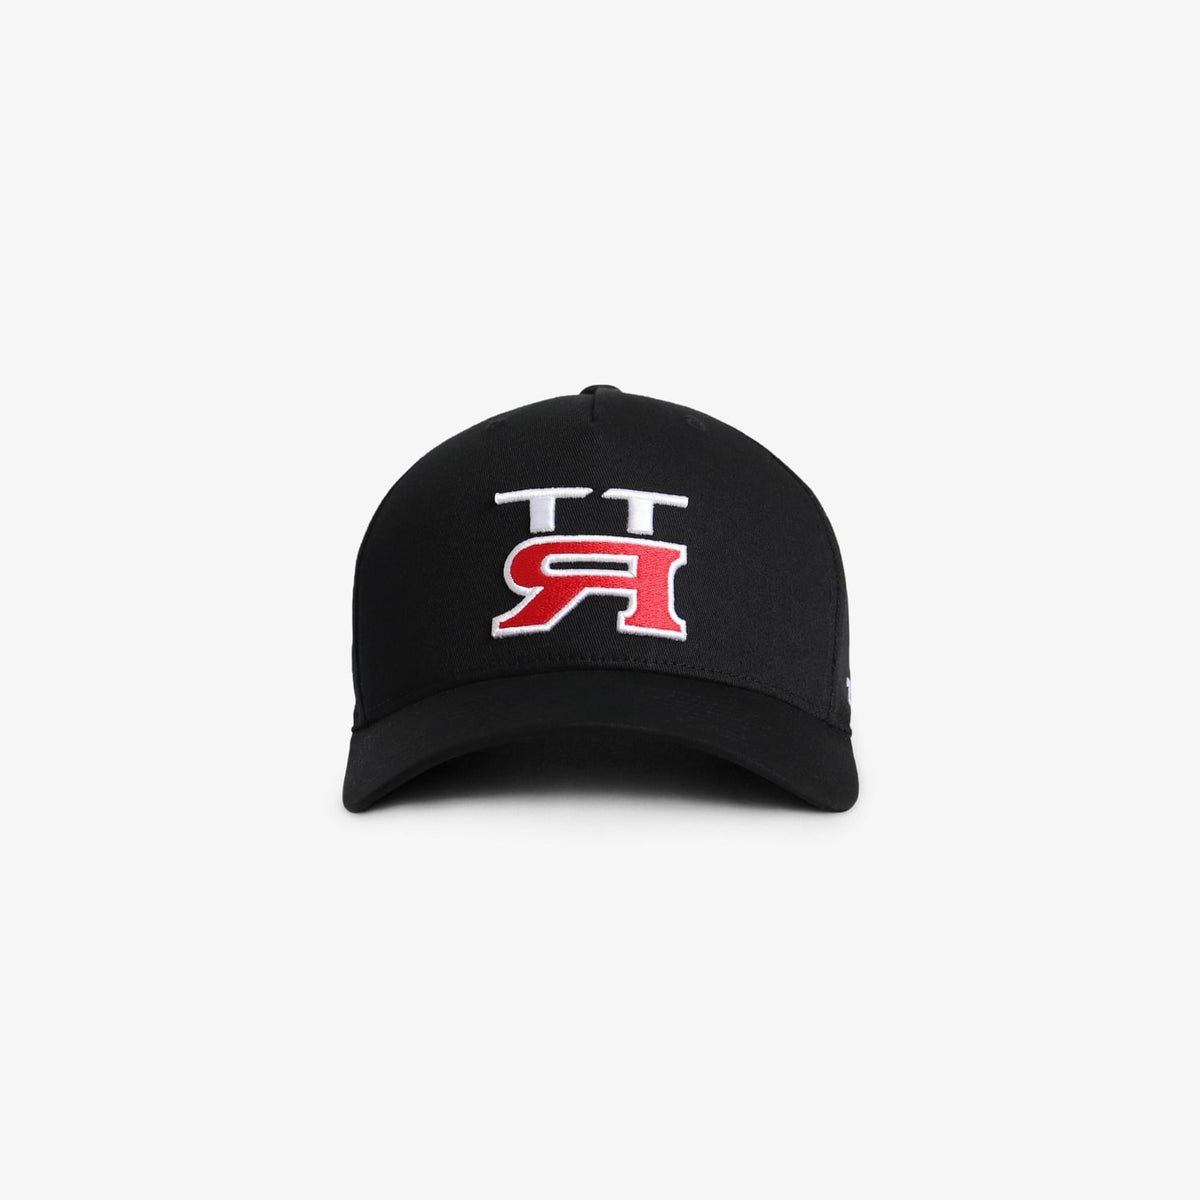 TT-R Hat Black